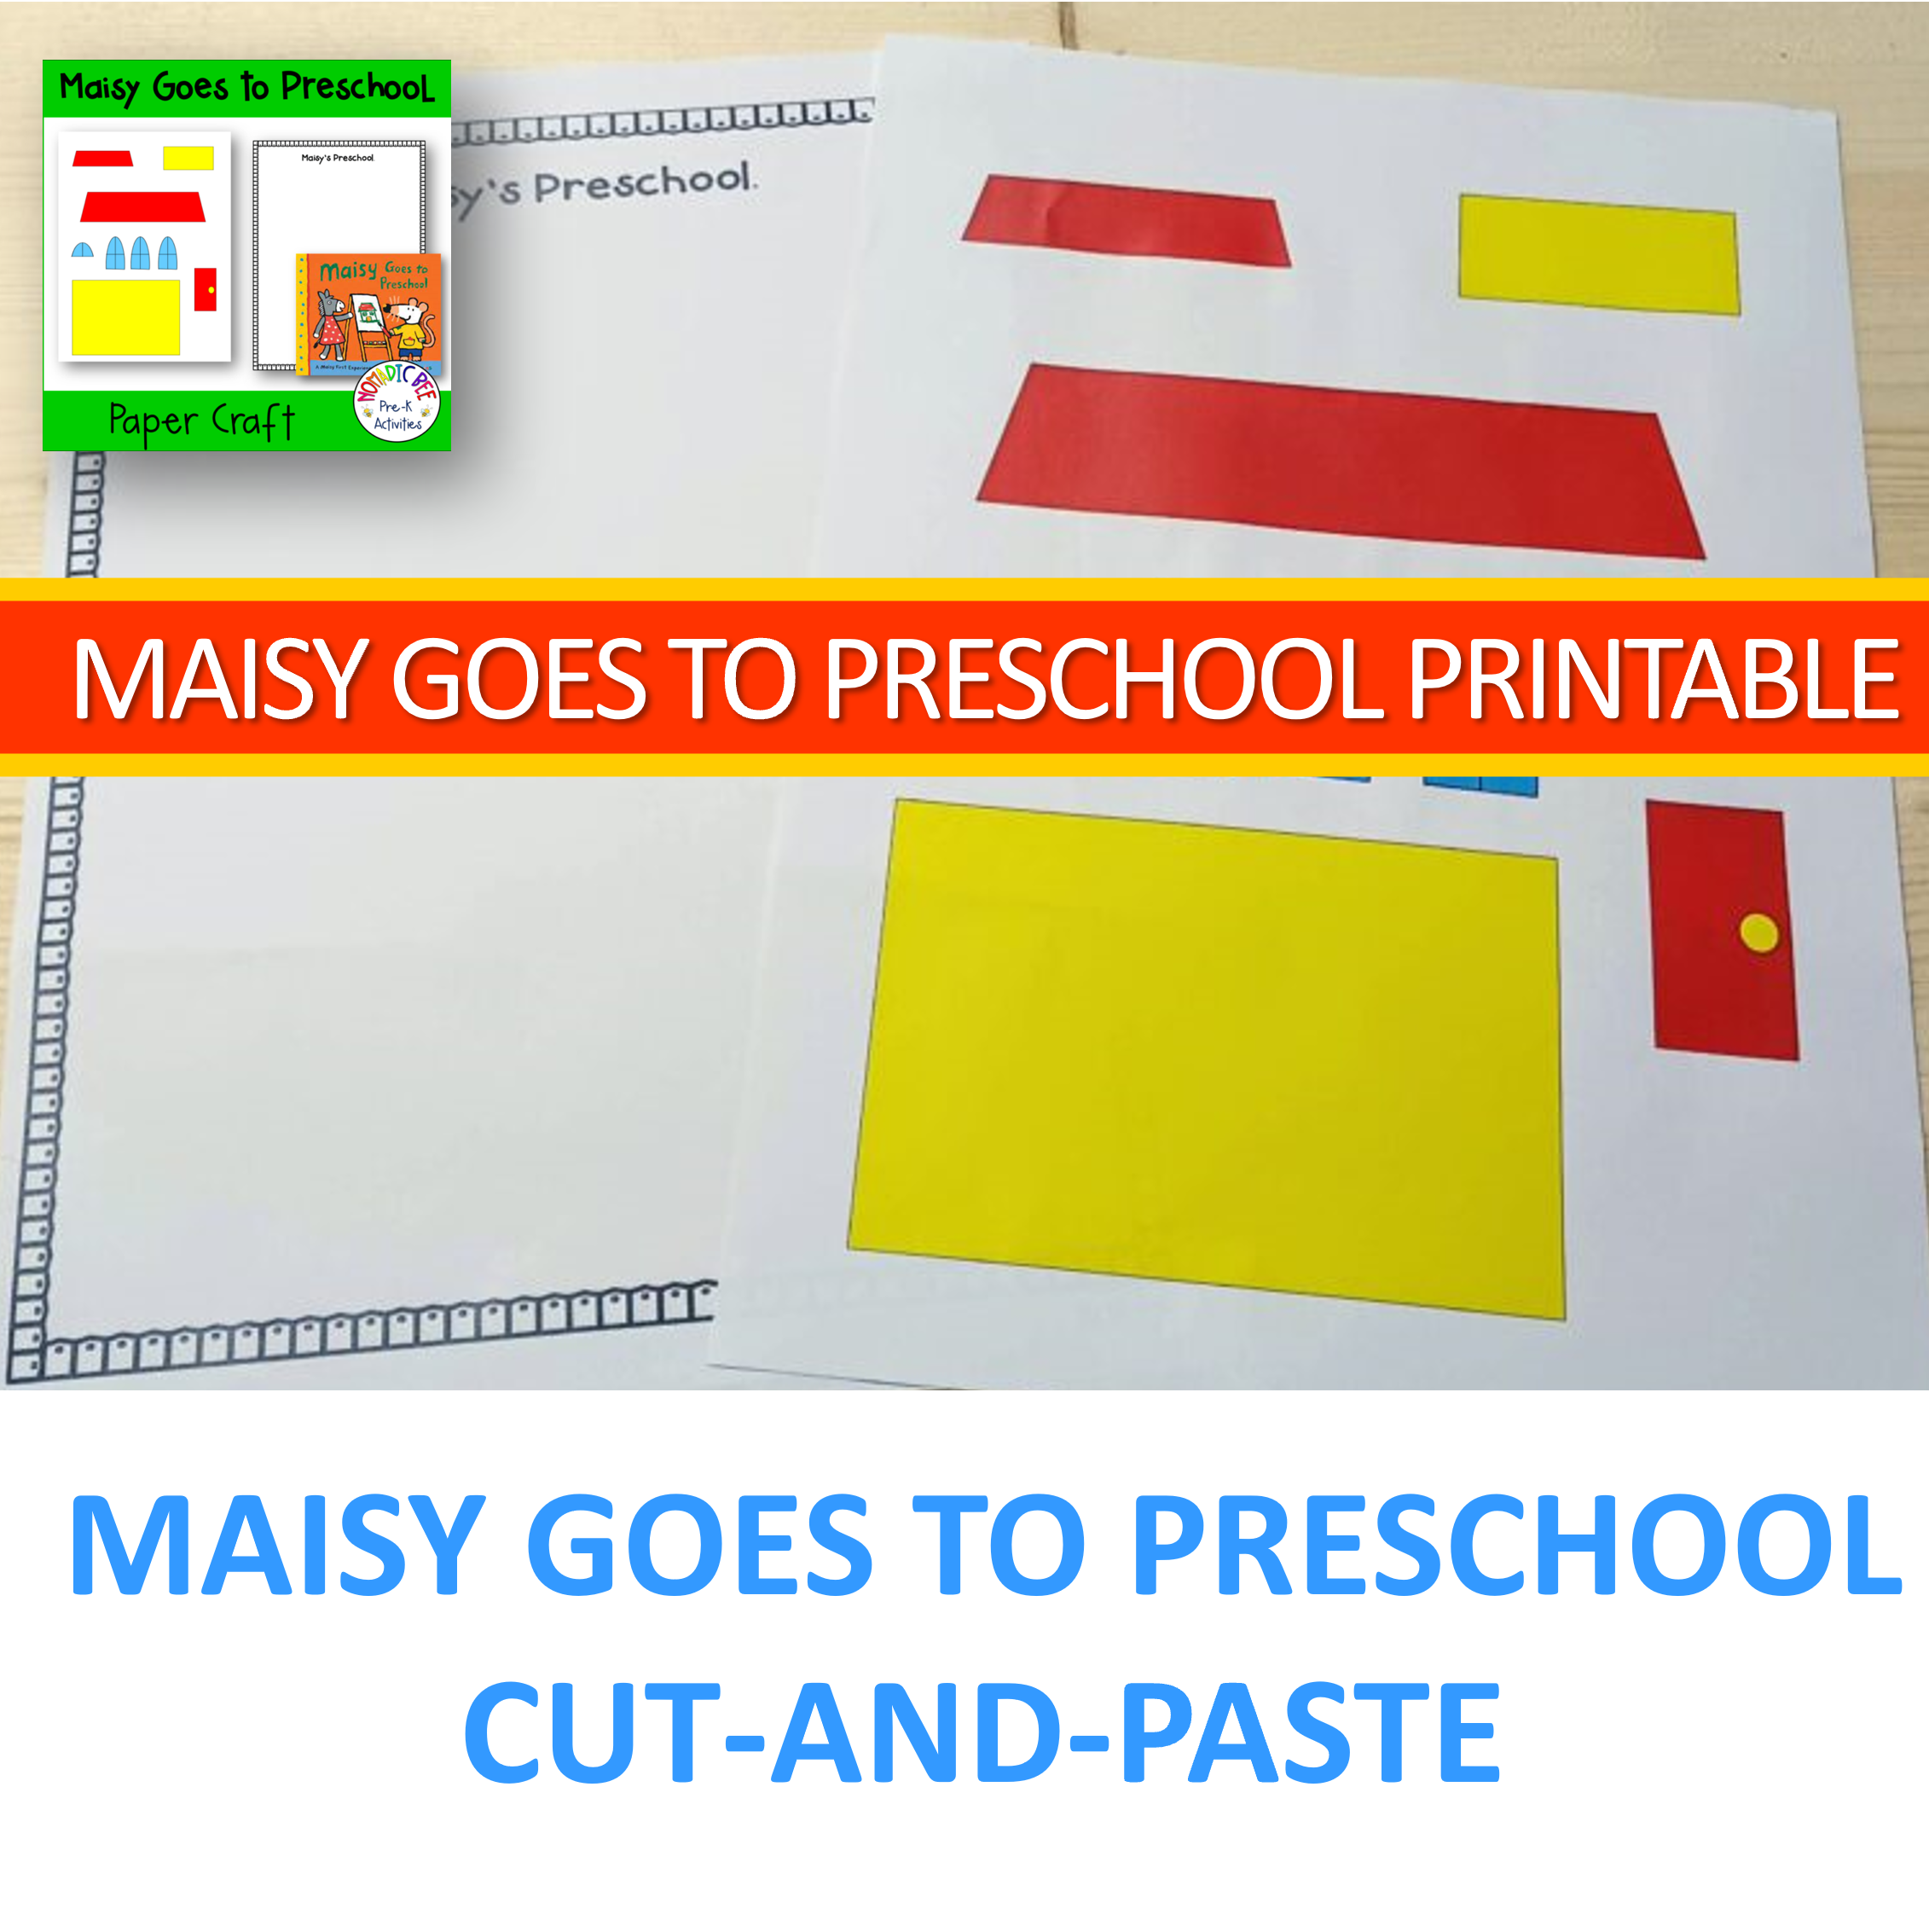 Maisy goes to preschool printable